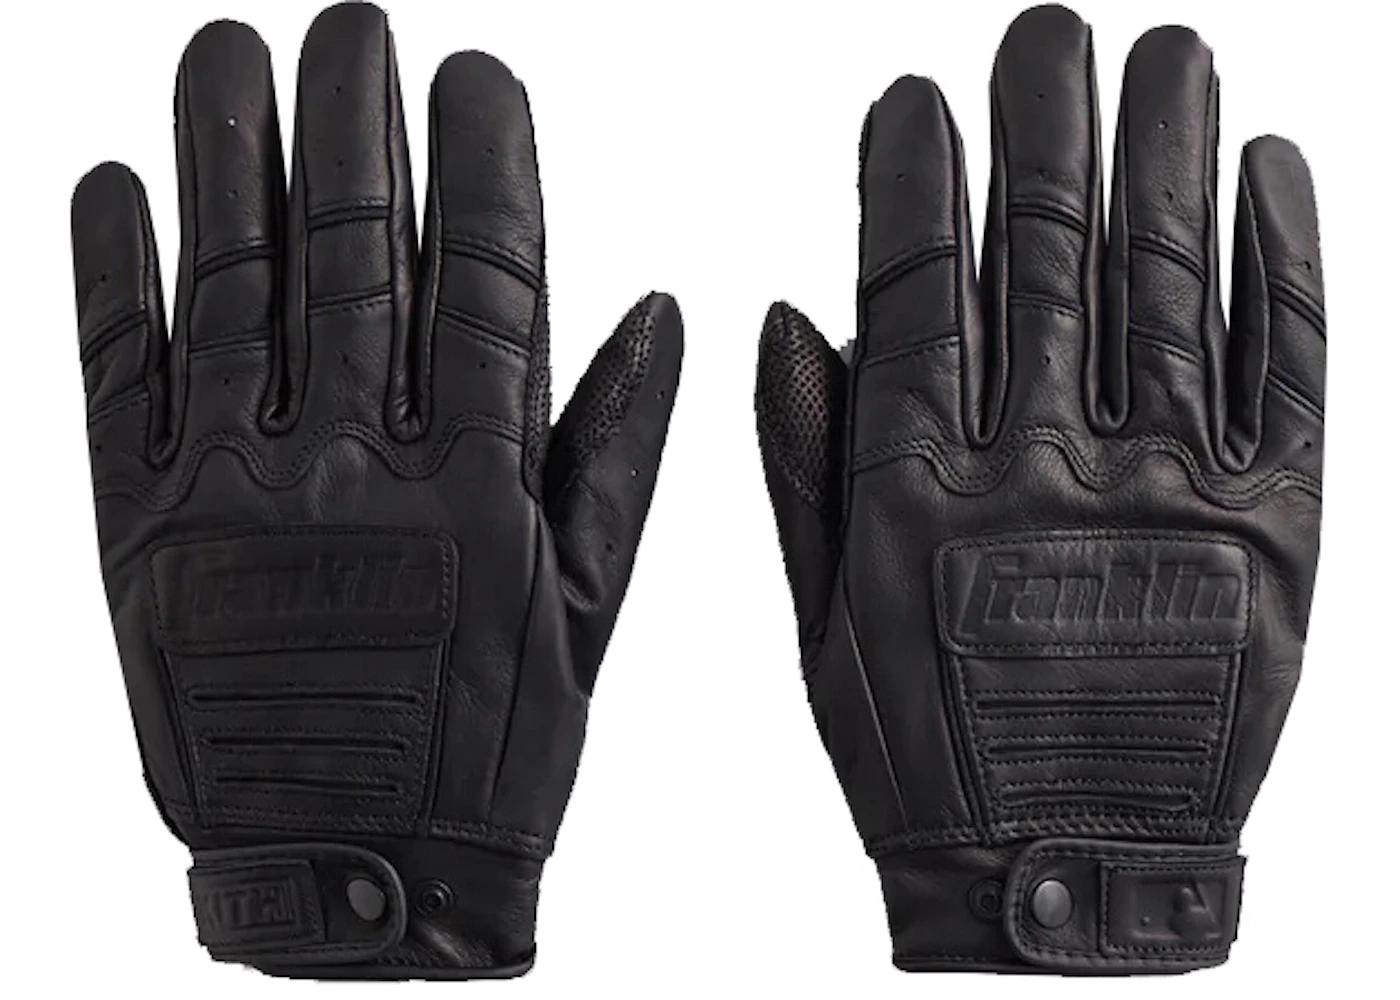 Franklin CFX Pro Gloves Black by KITH